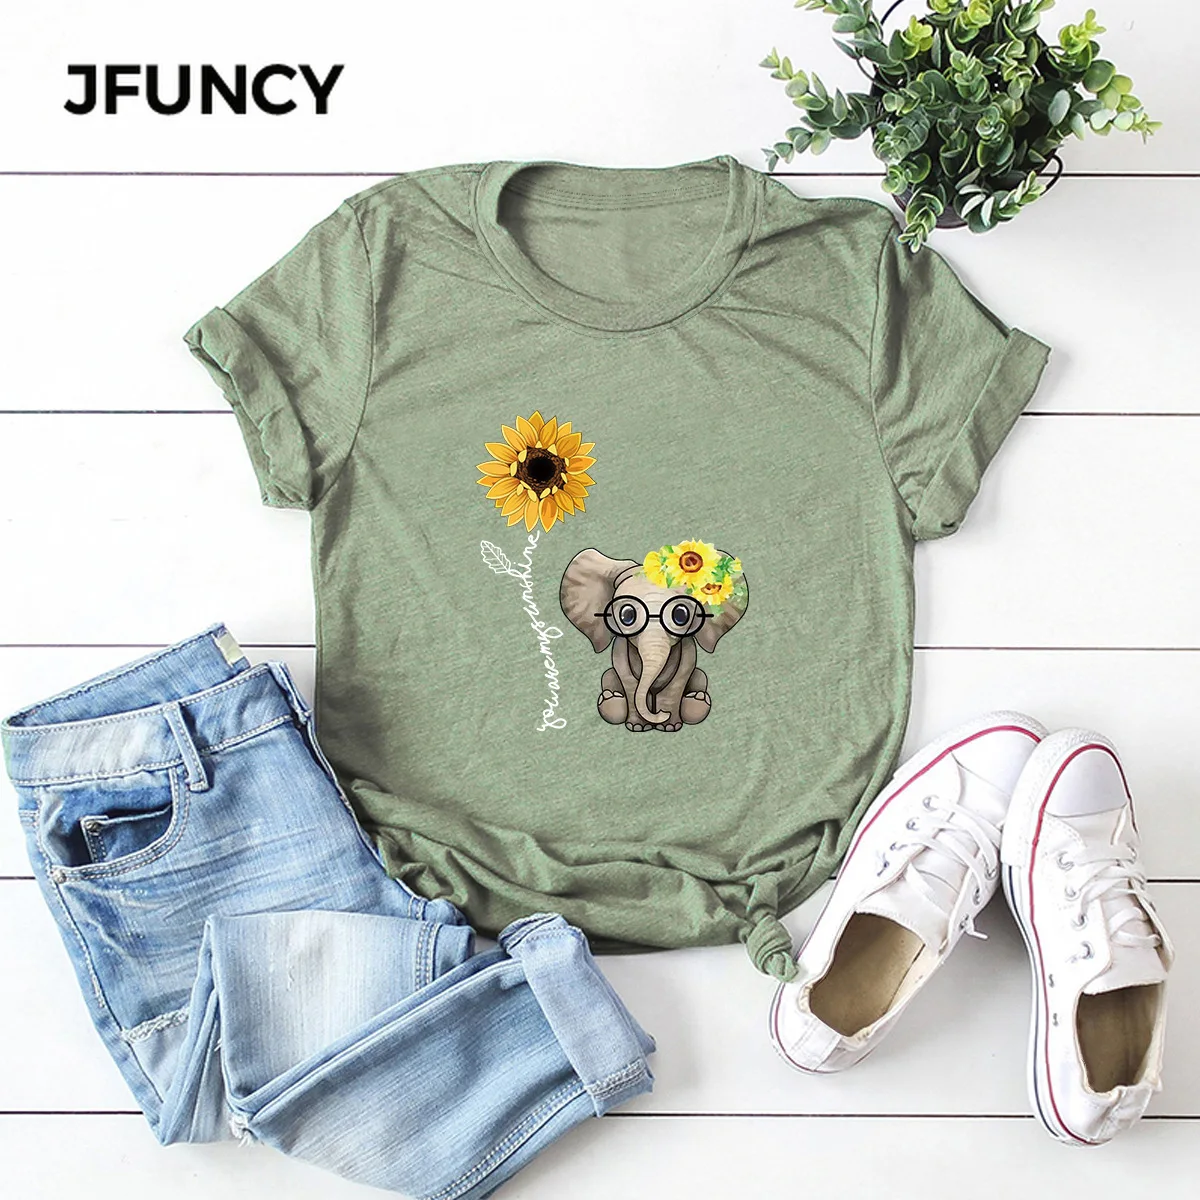 JFUNCY  Female Tshirt 100%Cotton T Shirts Women Short Sleeve Tees Summer Loose T-Shirt New Cute Elephant Print Tops